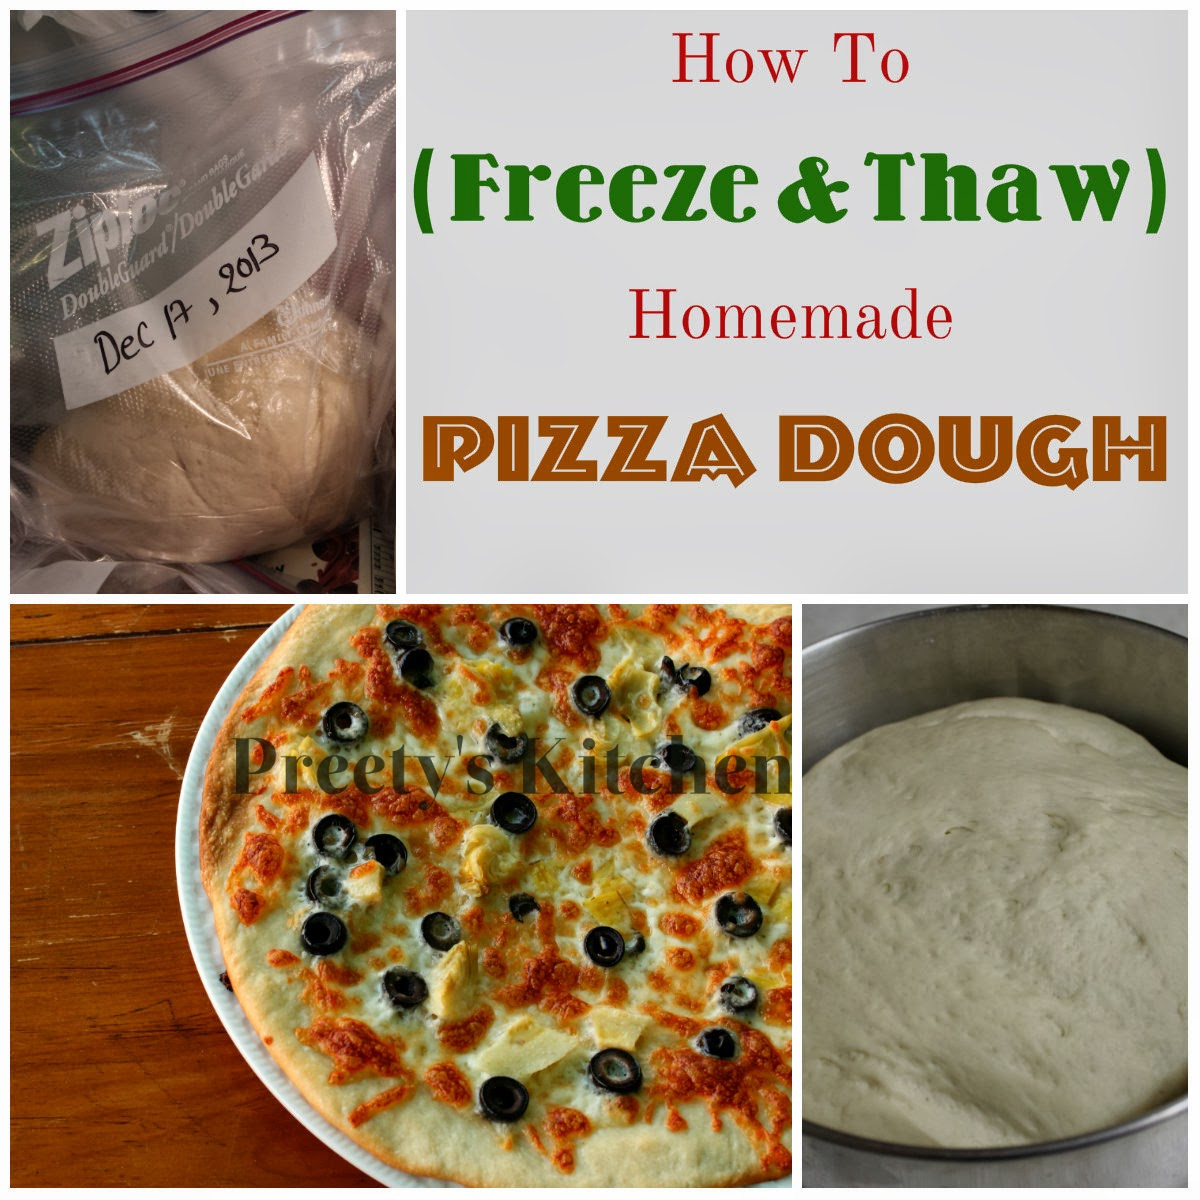 Pizza Dough Freezer
 Preety s Kitchen How To Freeze & Thaw Homemade Pizza